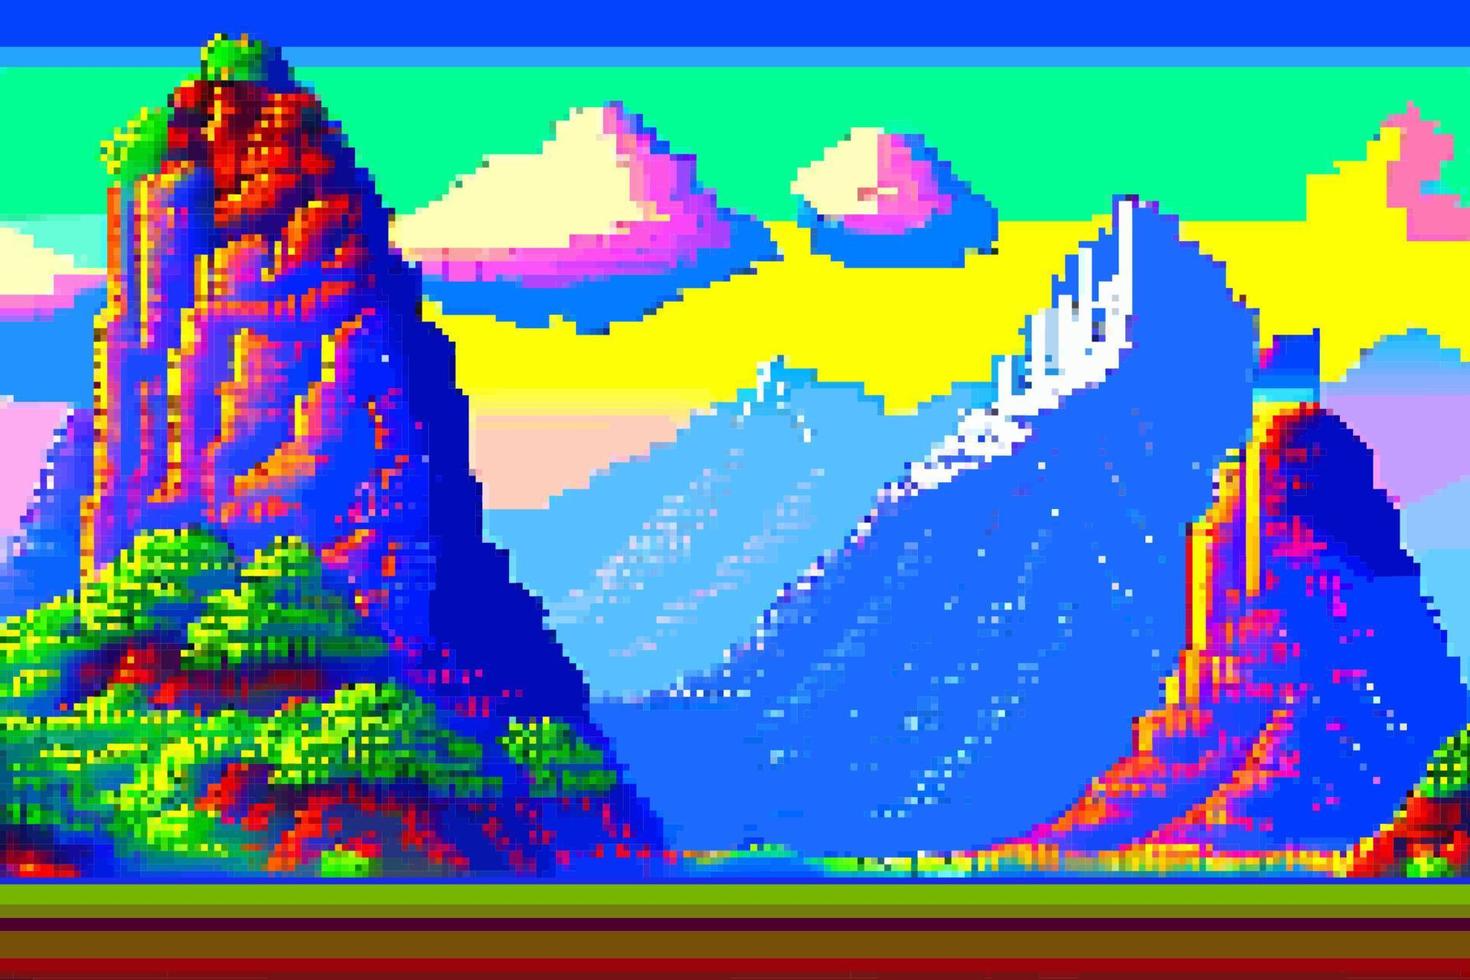 Landschaft 8 Bit Pixel Kunst. Sommer- natürlich Landschaft Berg Landschaft Arkade Video Spiel Hintergrund vektor